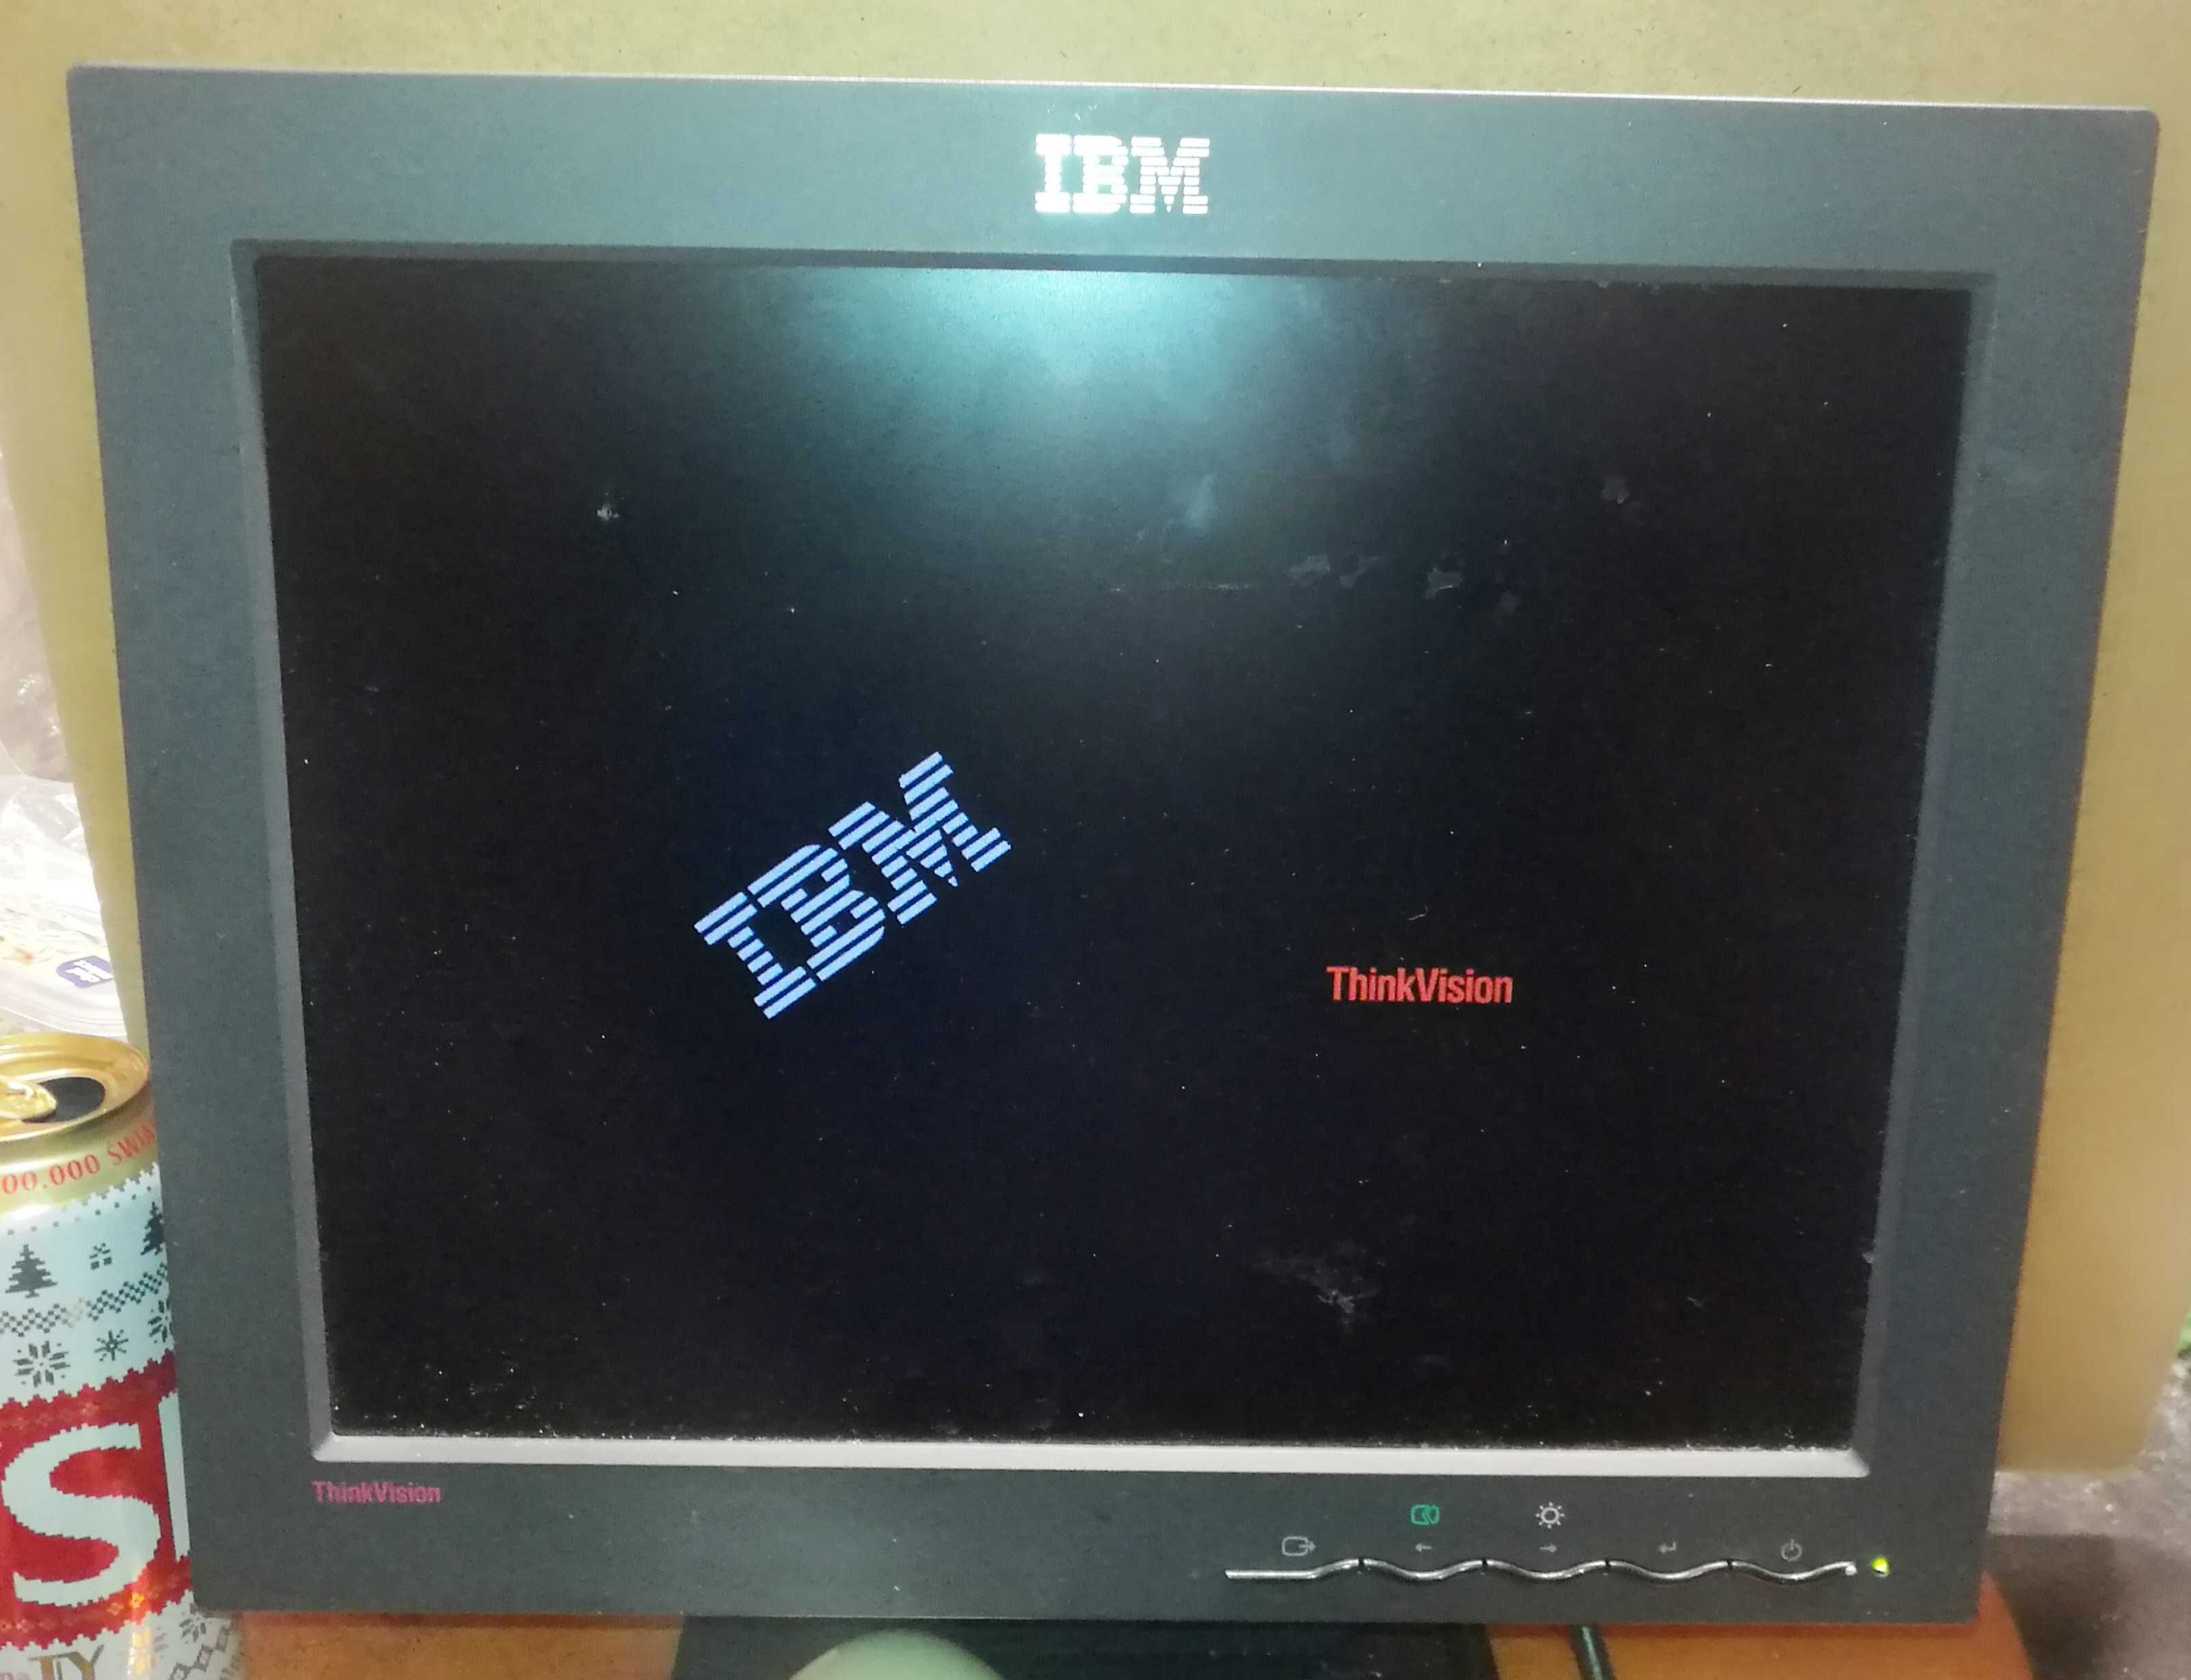 Monitor VGA IBM ThinkVision 6636-AB2 15"